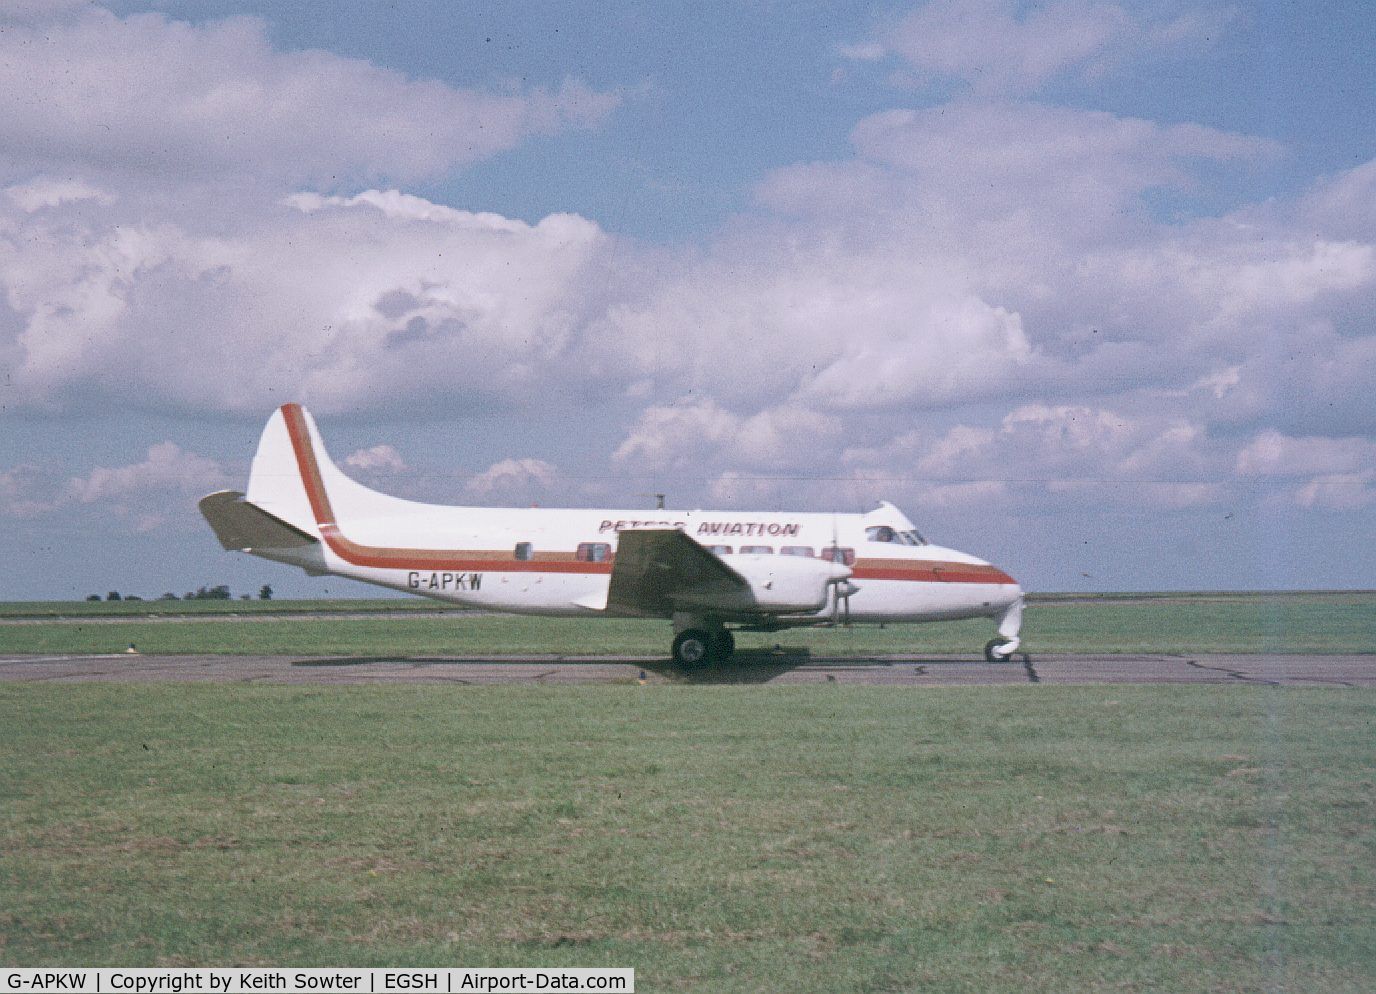 G-APKW, 1954 De Havilland DH-114 Heron1B/C C/N 14046, Based aircraft at the time